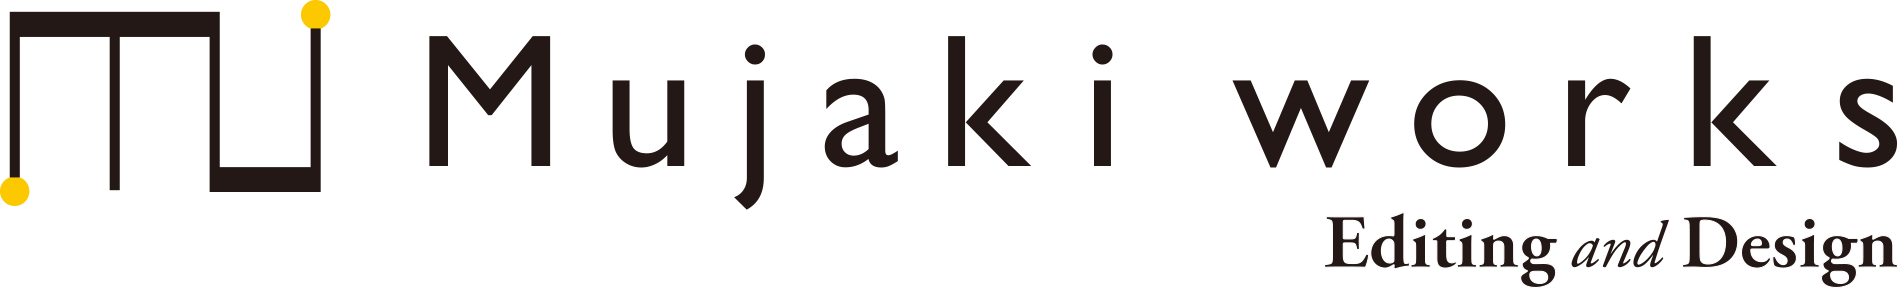 Mujaki Works -Editing and Design